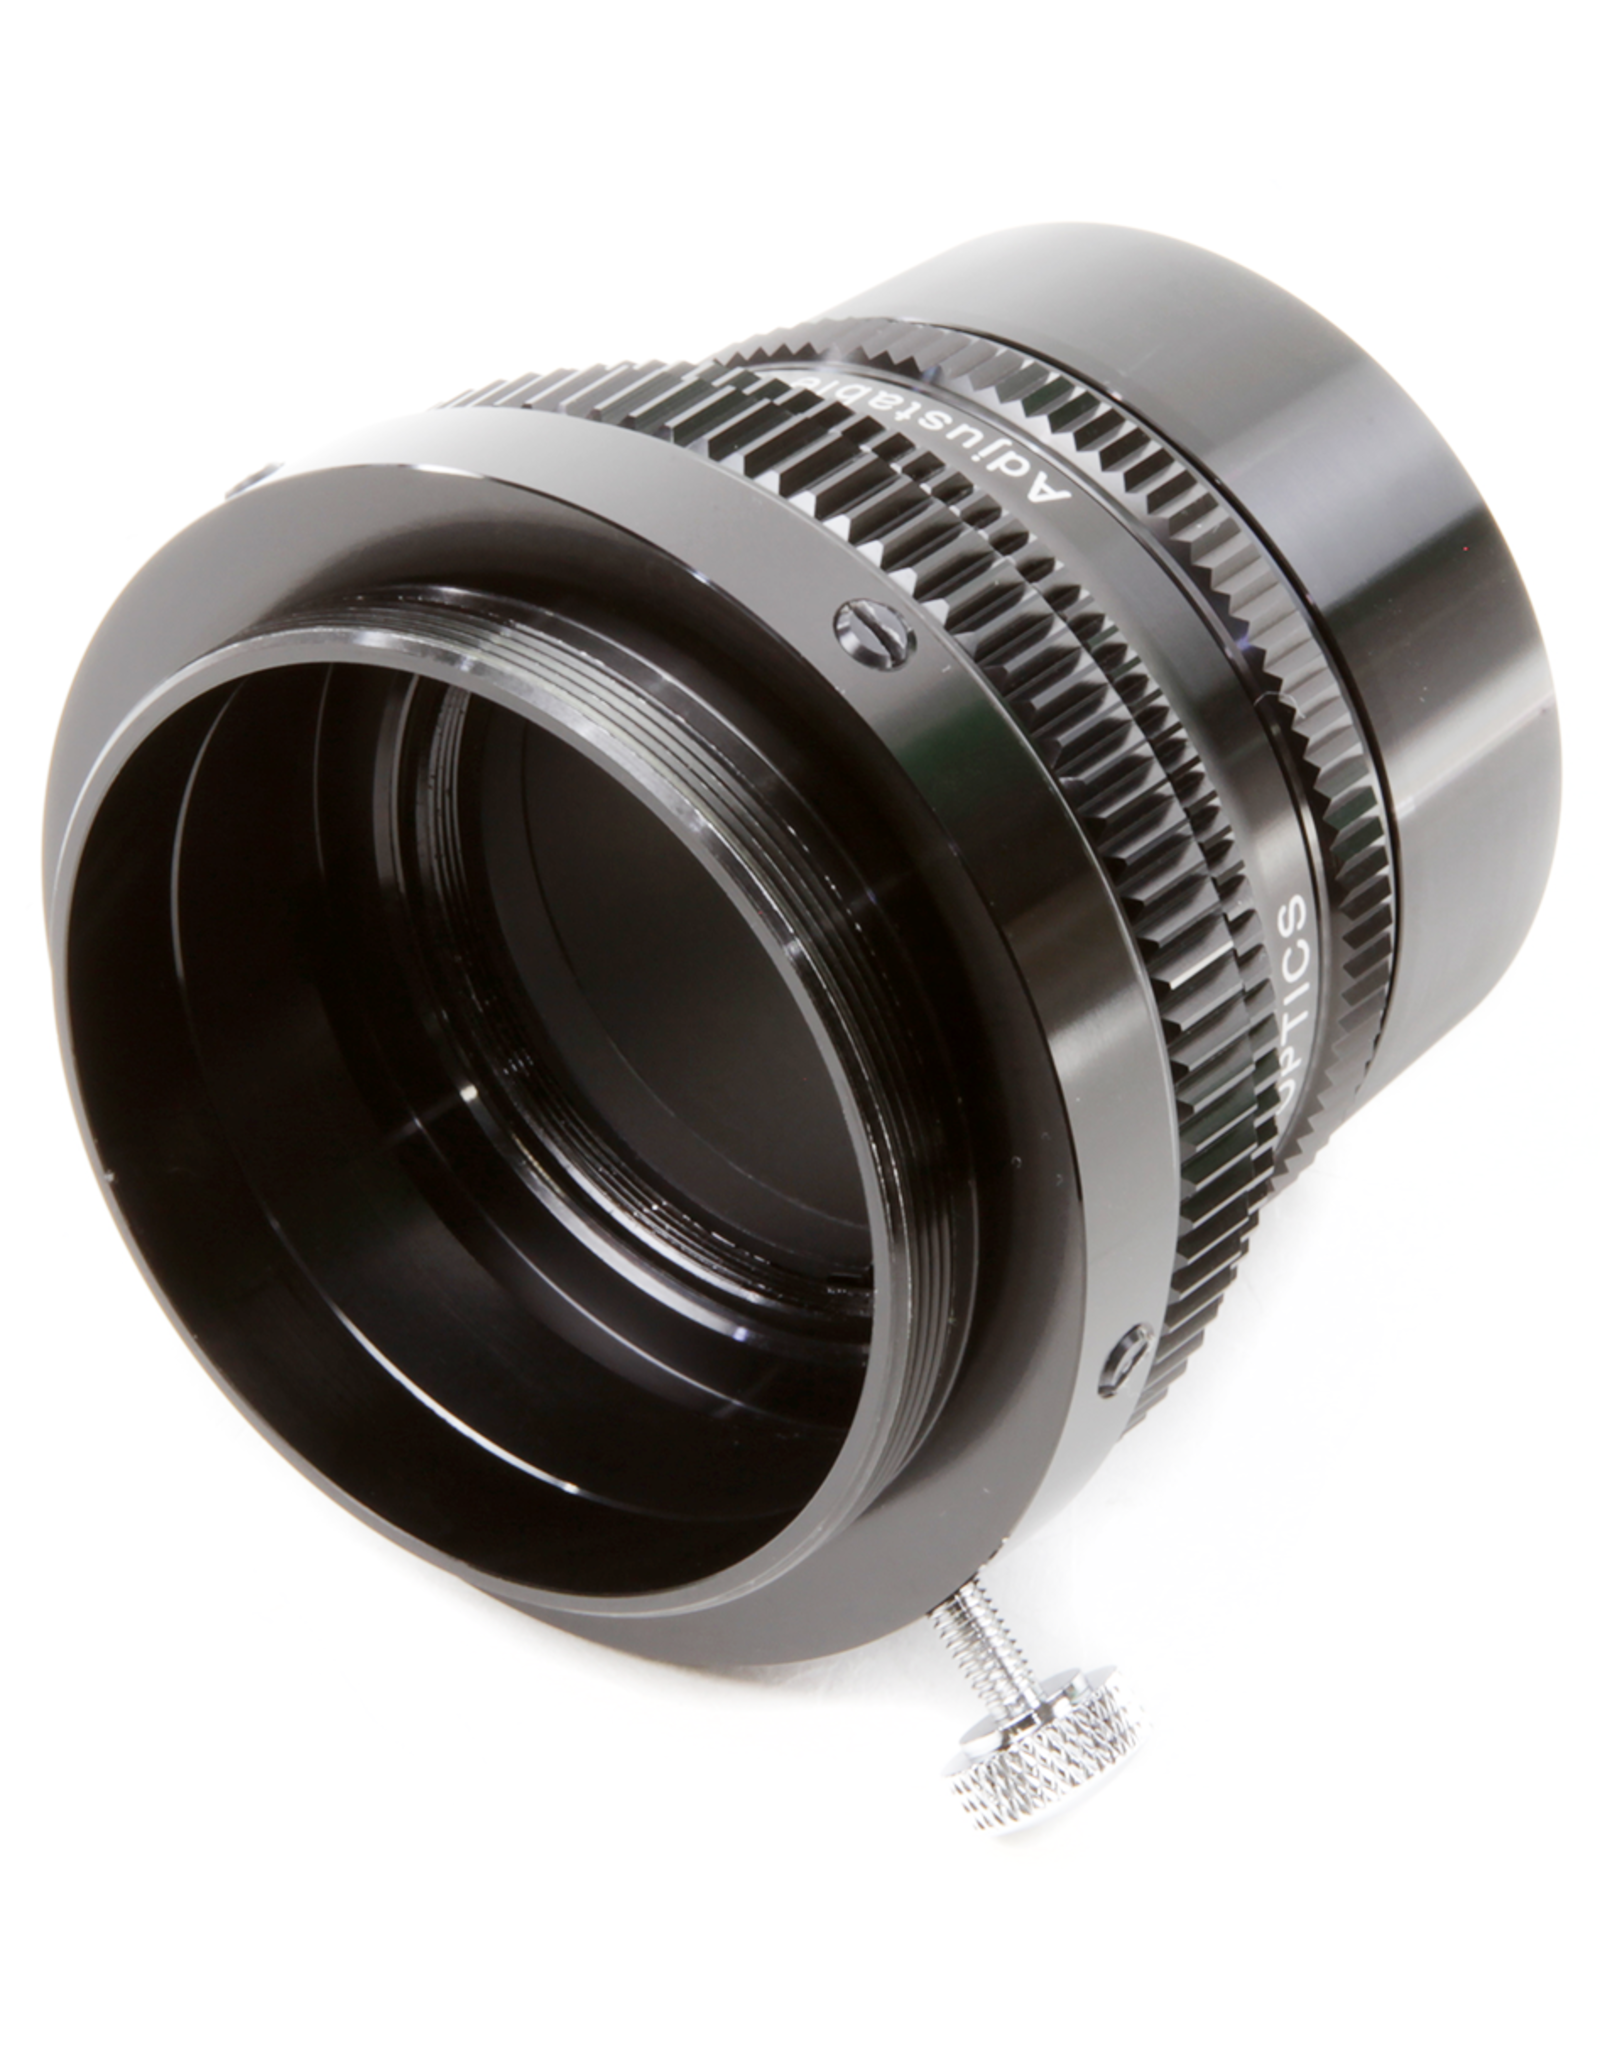 William Optics New Adjustable Flat73a For Z73 Camera Concepts